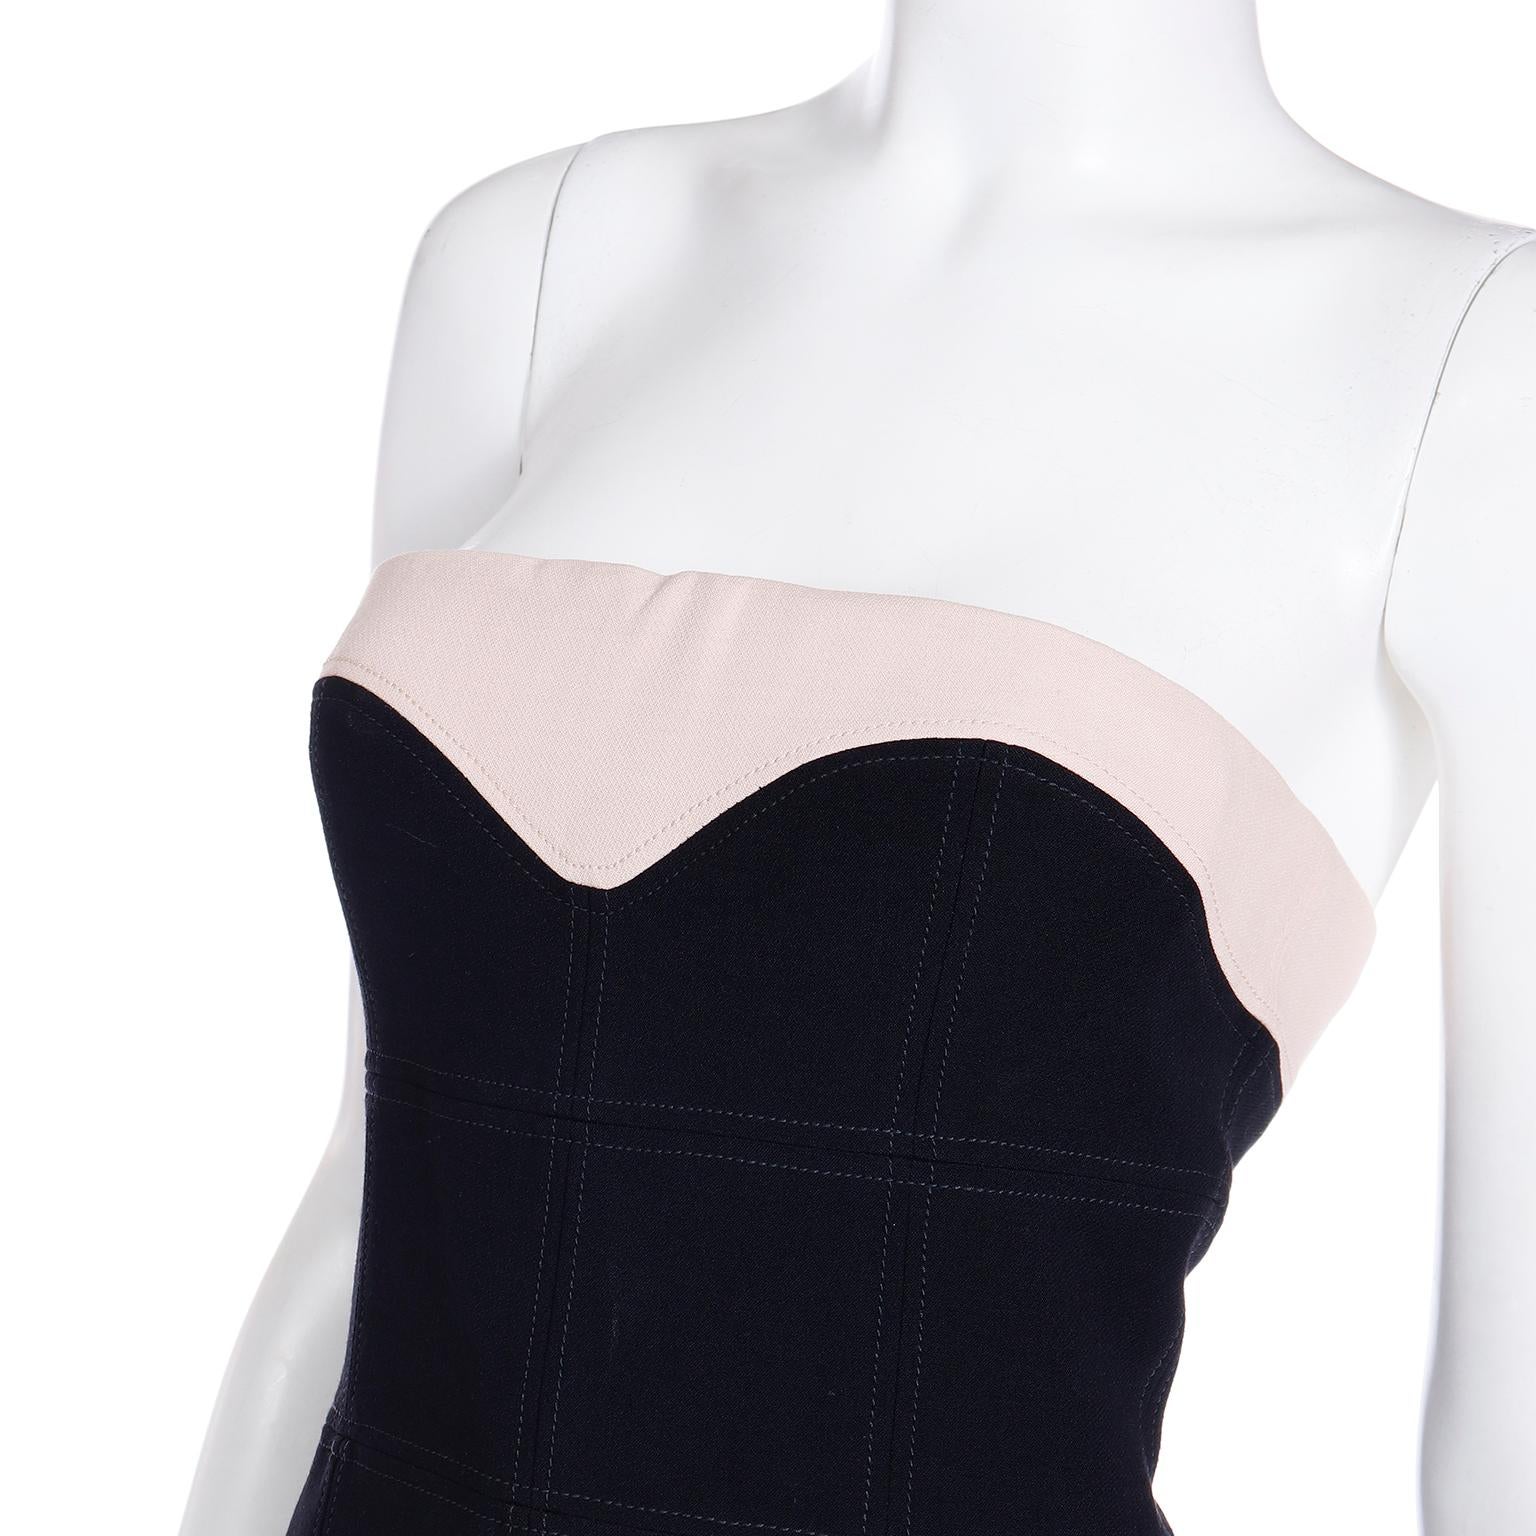 Alexander McQueen Two Tone Beige & Black Strapless Evening Dress For Sale 3